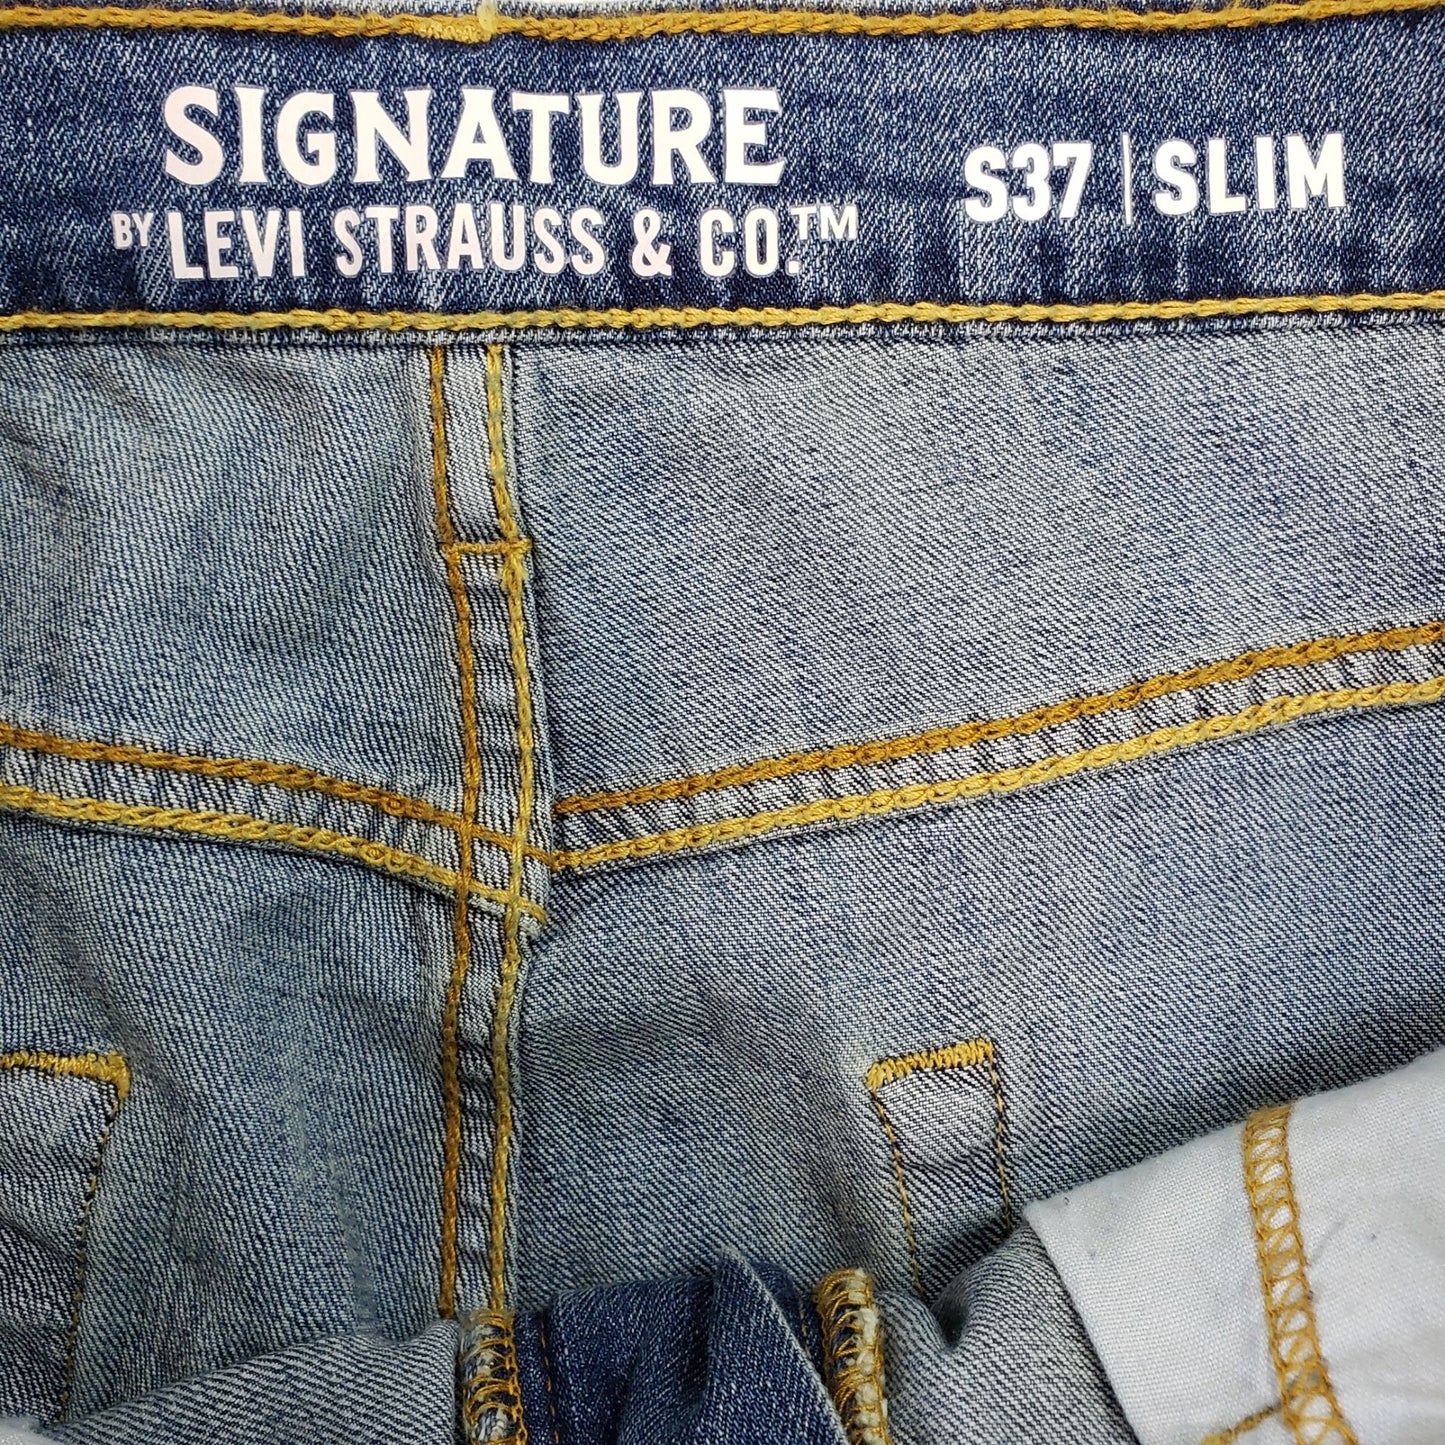 NWT Levi's Signature S37 Slim Fit Jeans Size 32x32